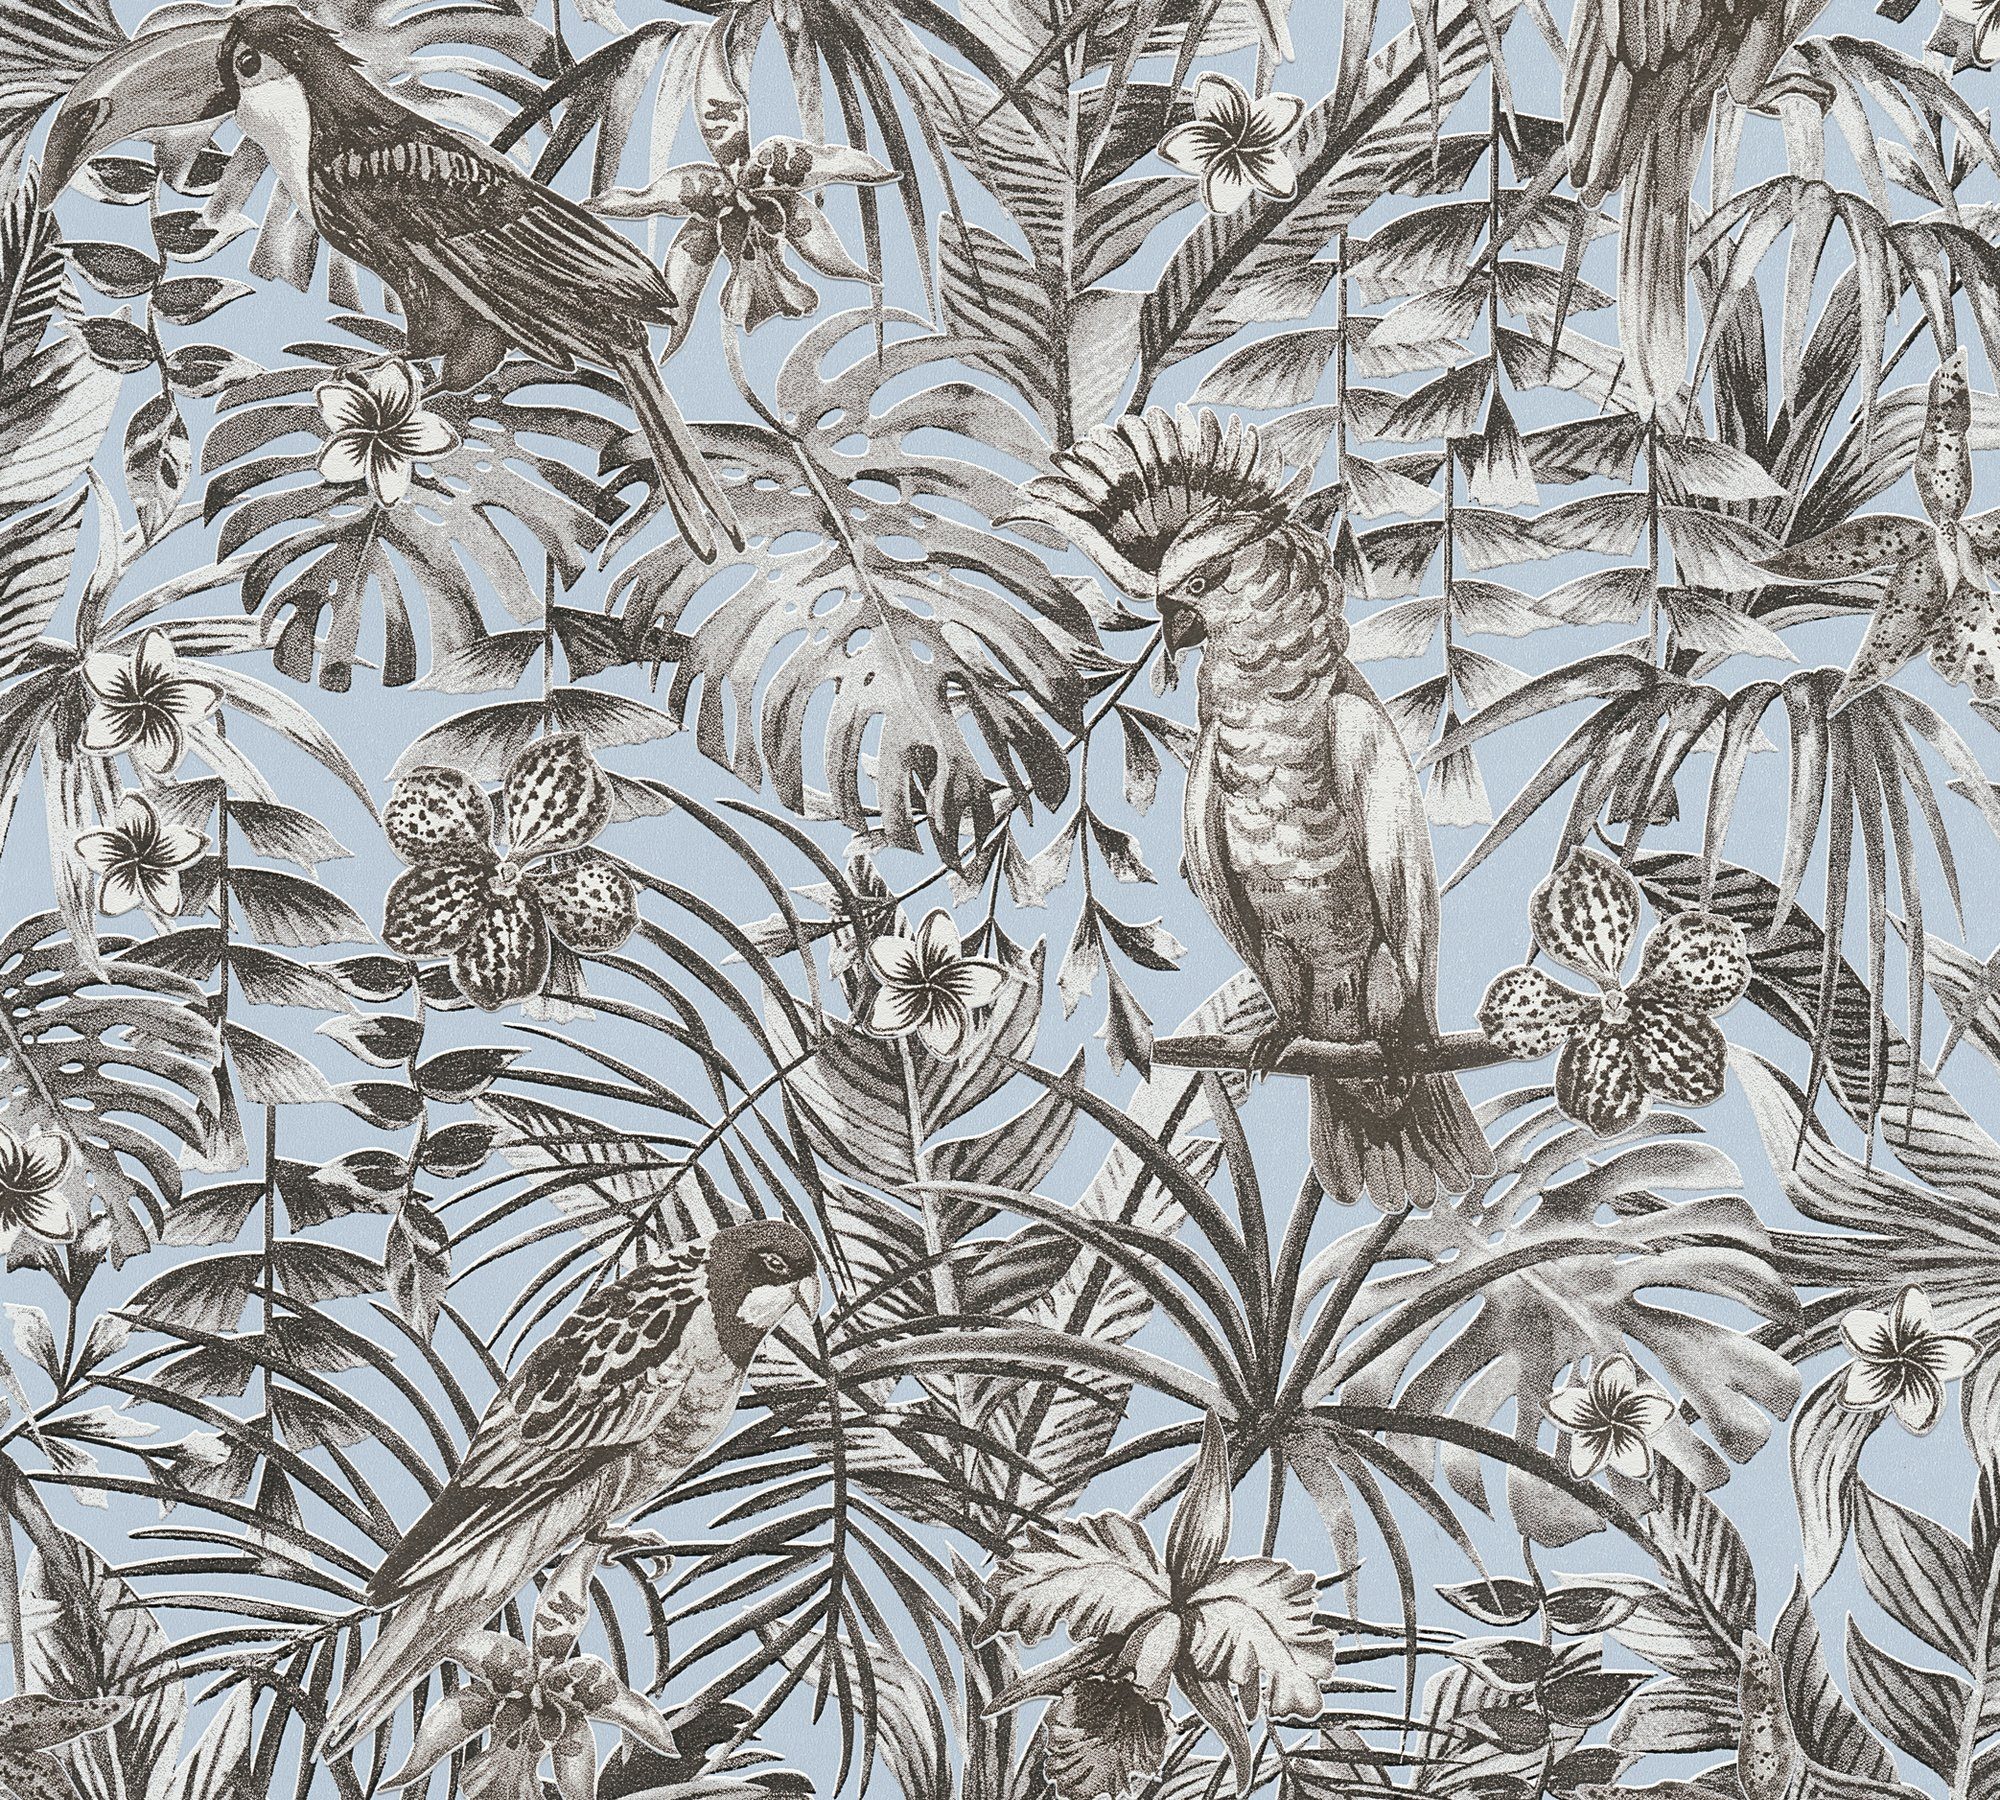 Dschungel strukturiert, Palmenprint Greenery Dschungel in Vliestapete Optik, Tapete Création A.S. grau Vogeltapete floral, mit